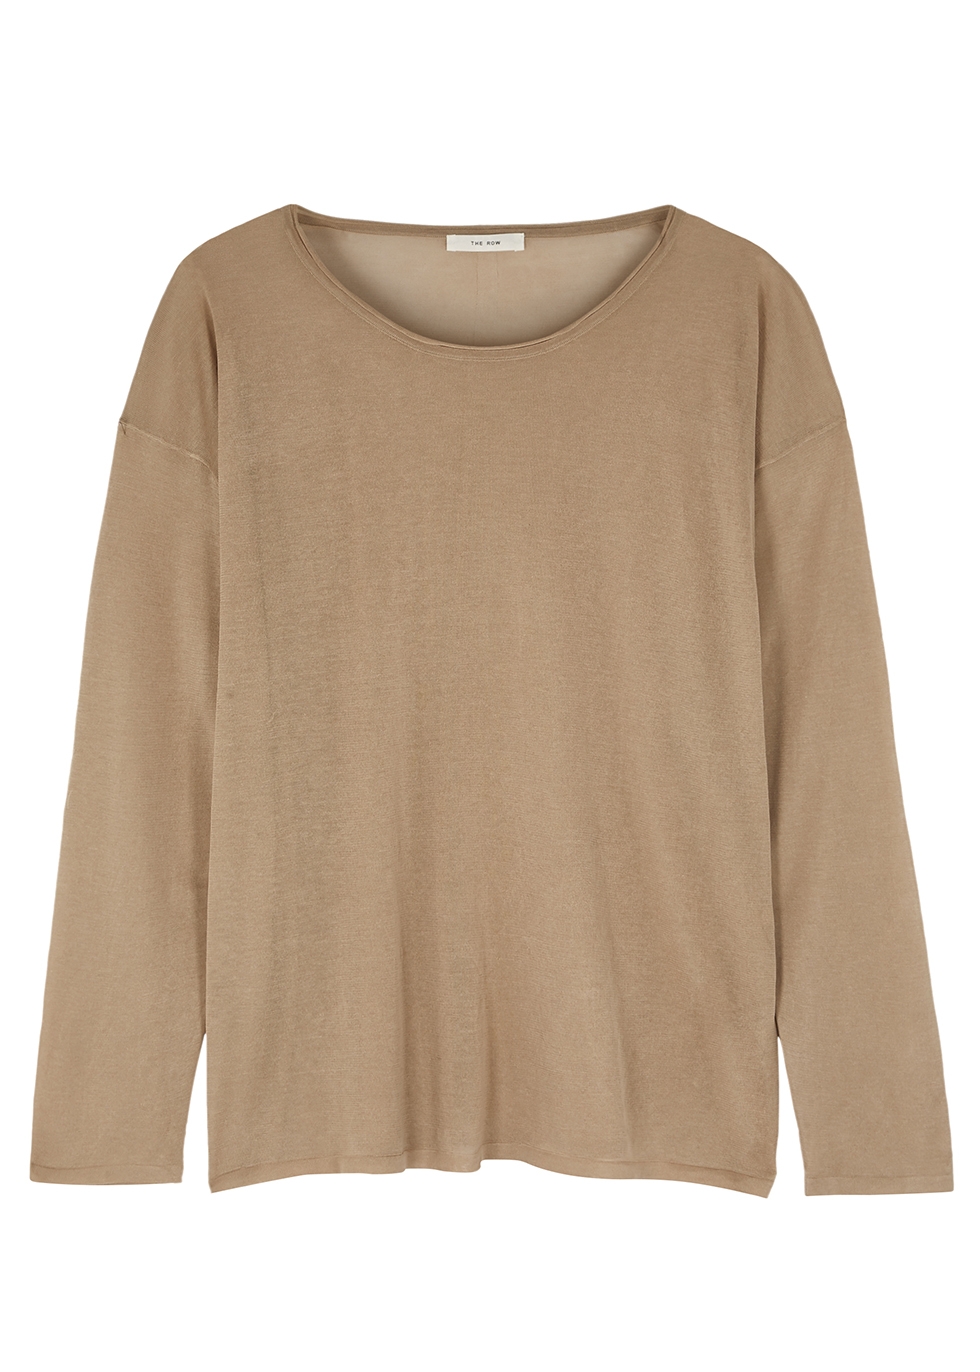 Emilia brown fine-knit cotton top